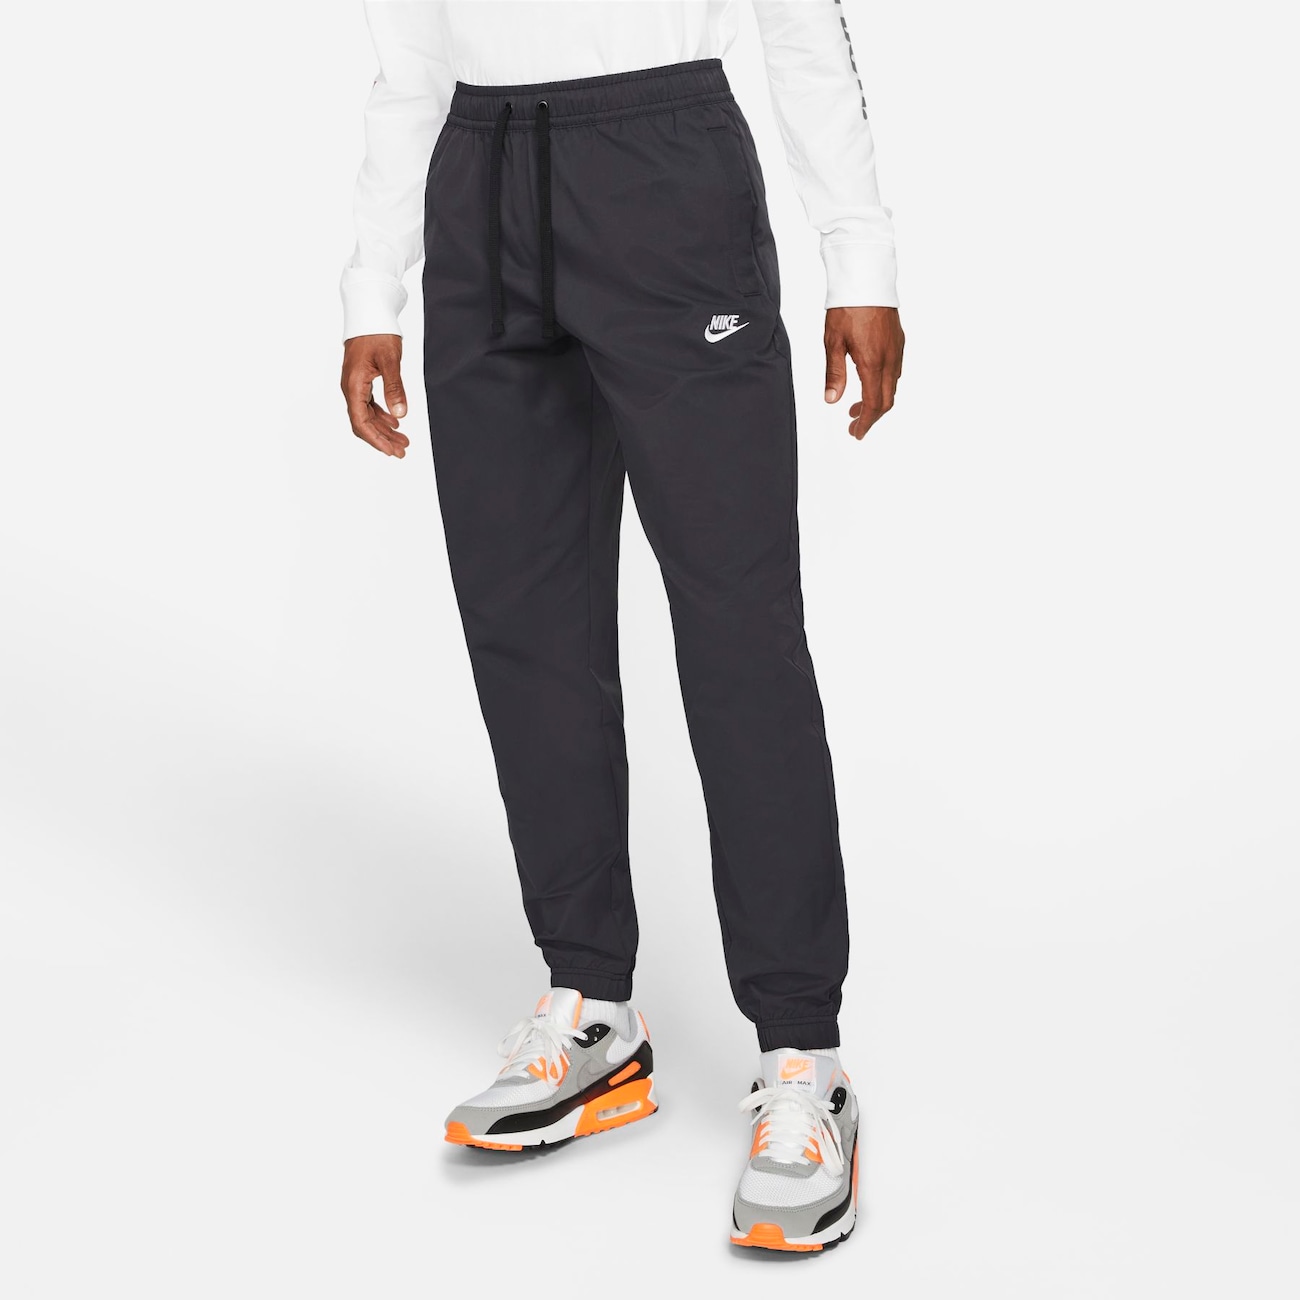 Calça Nike Sportswear Masculina